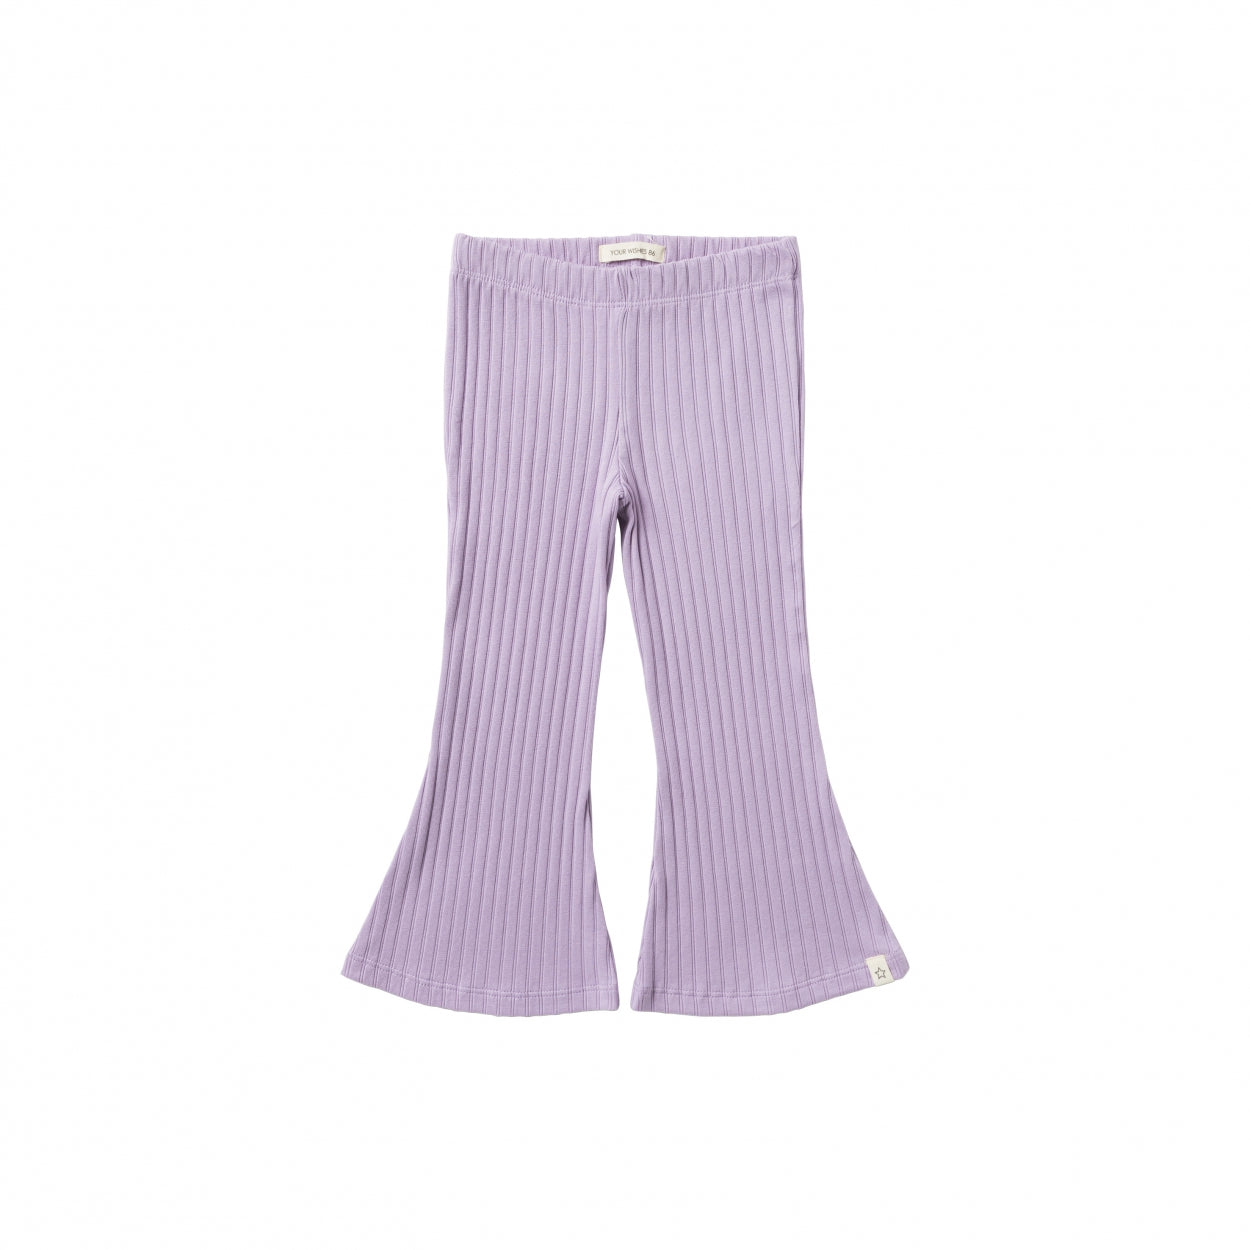 Meisjes Legging Twin Rib | Nikita van Your Wishes in de kleur Lavender in maat 98.